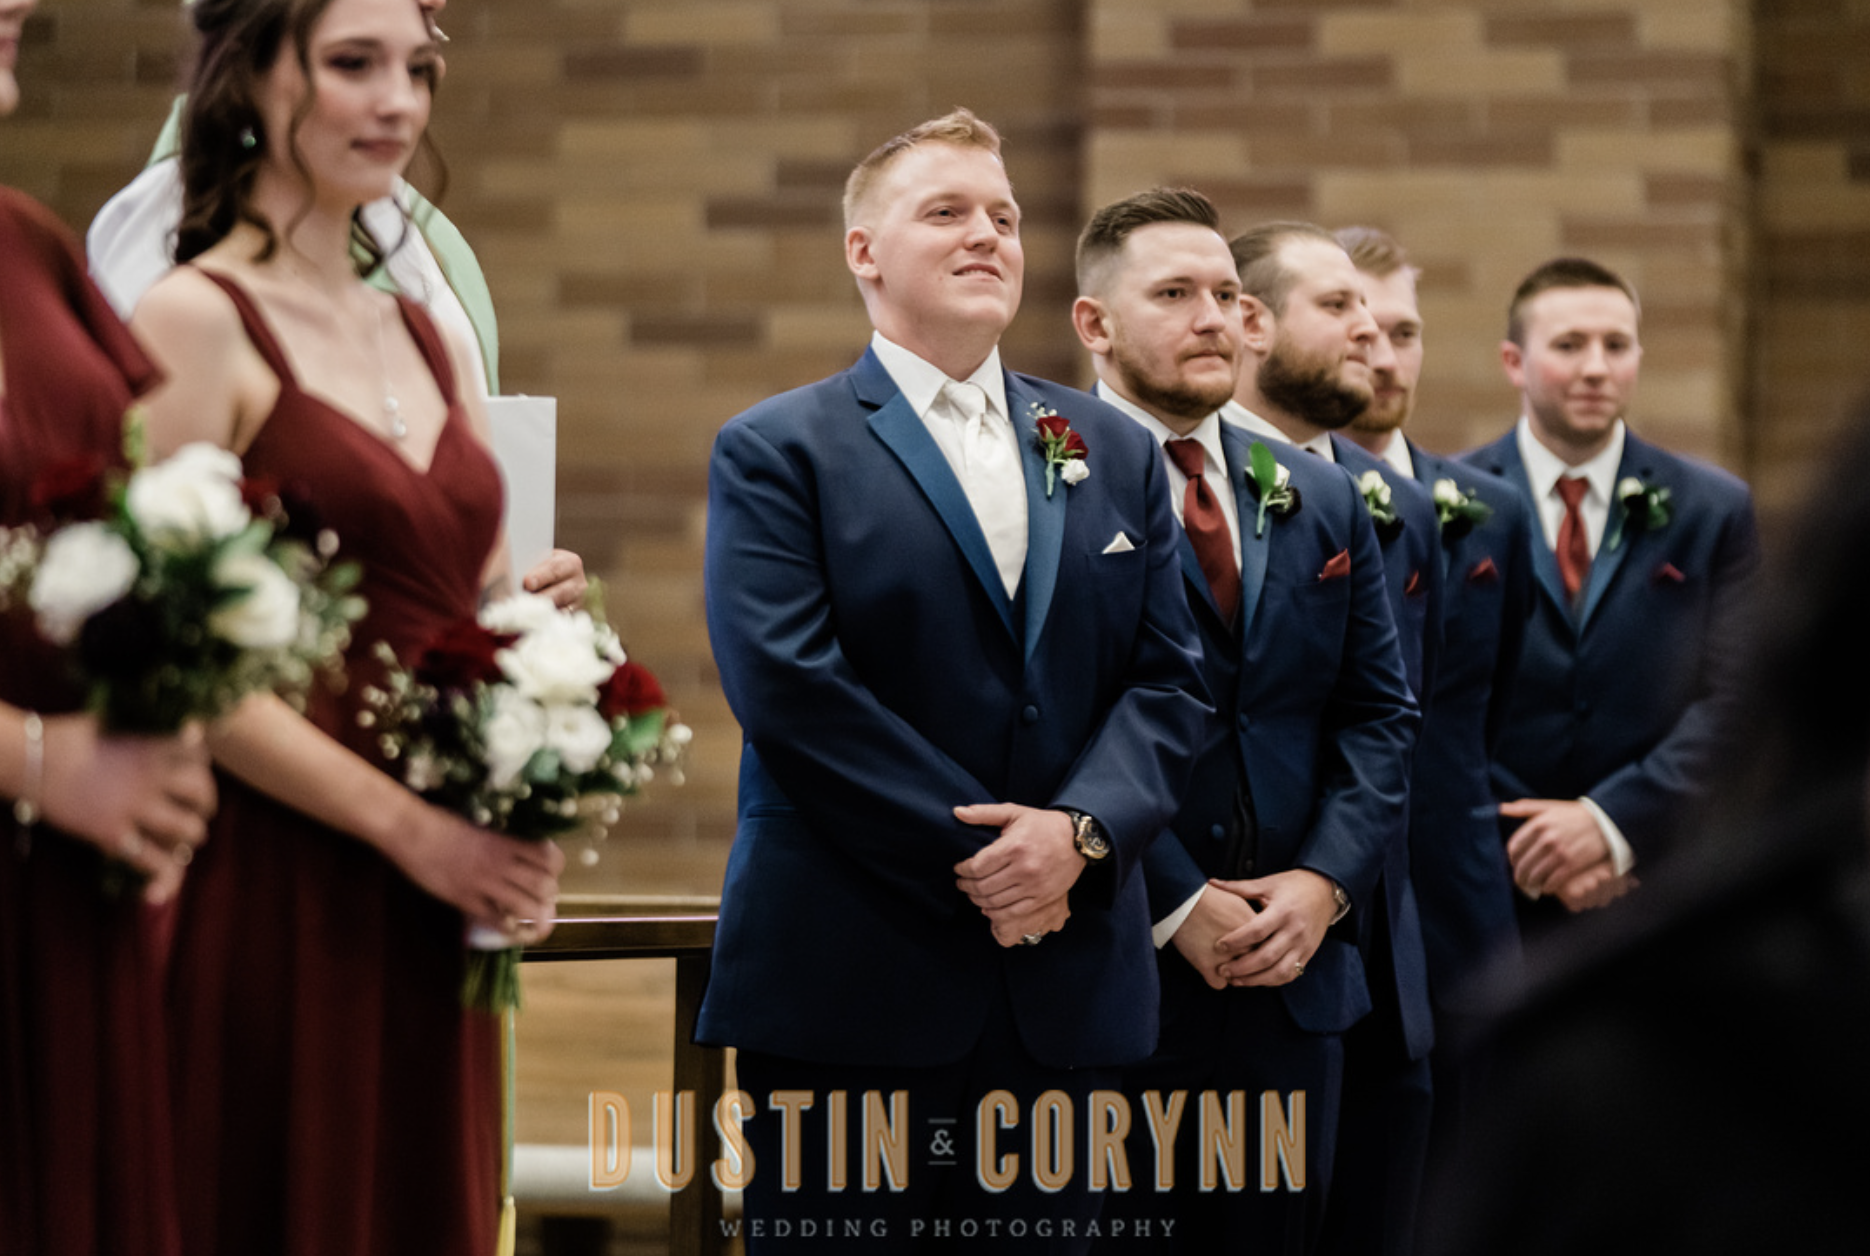 Fort Wayne wedding photographer captures groom standing waiting for bride to enter